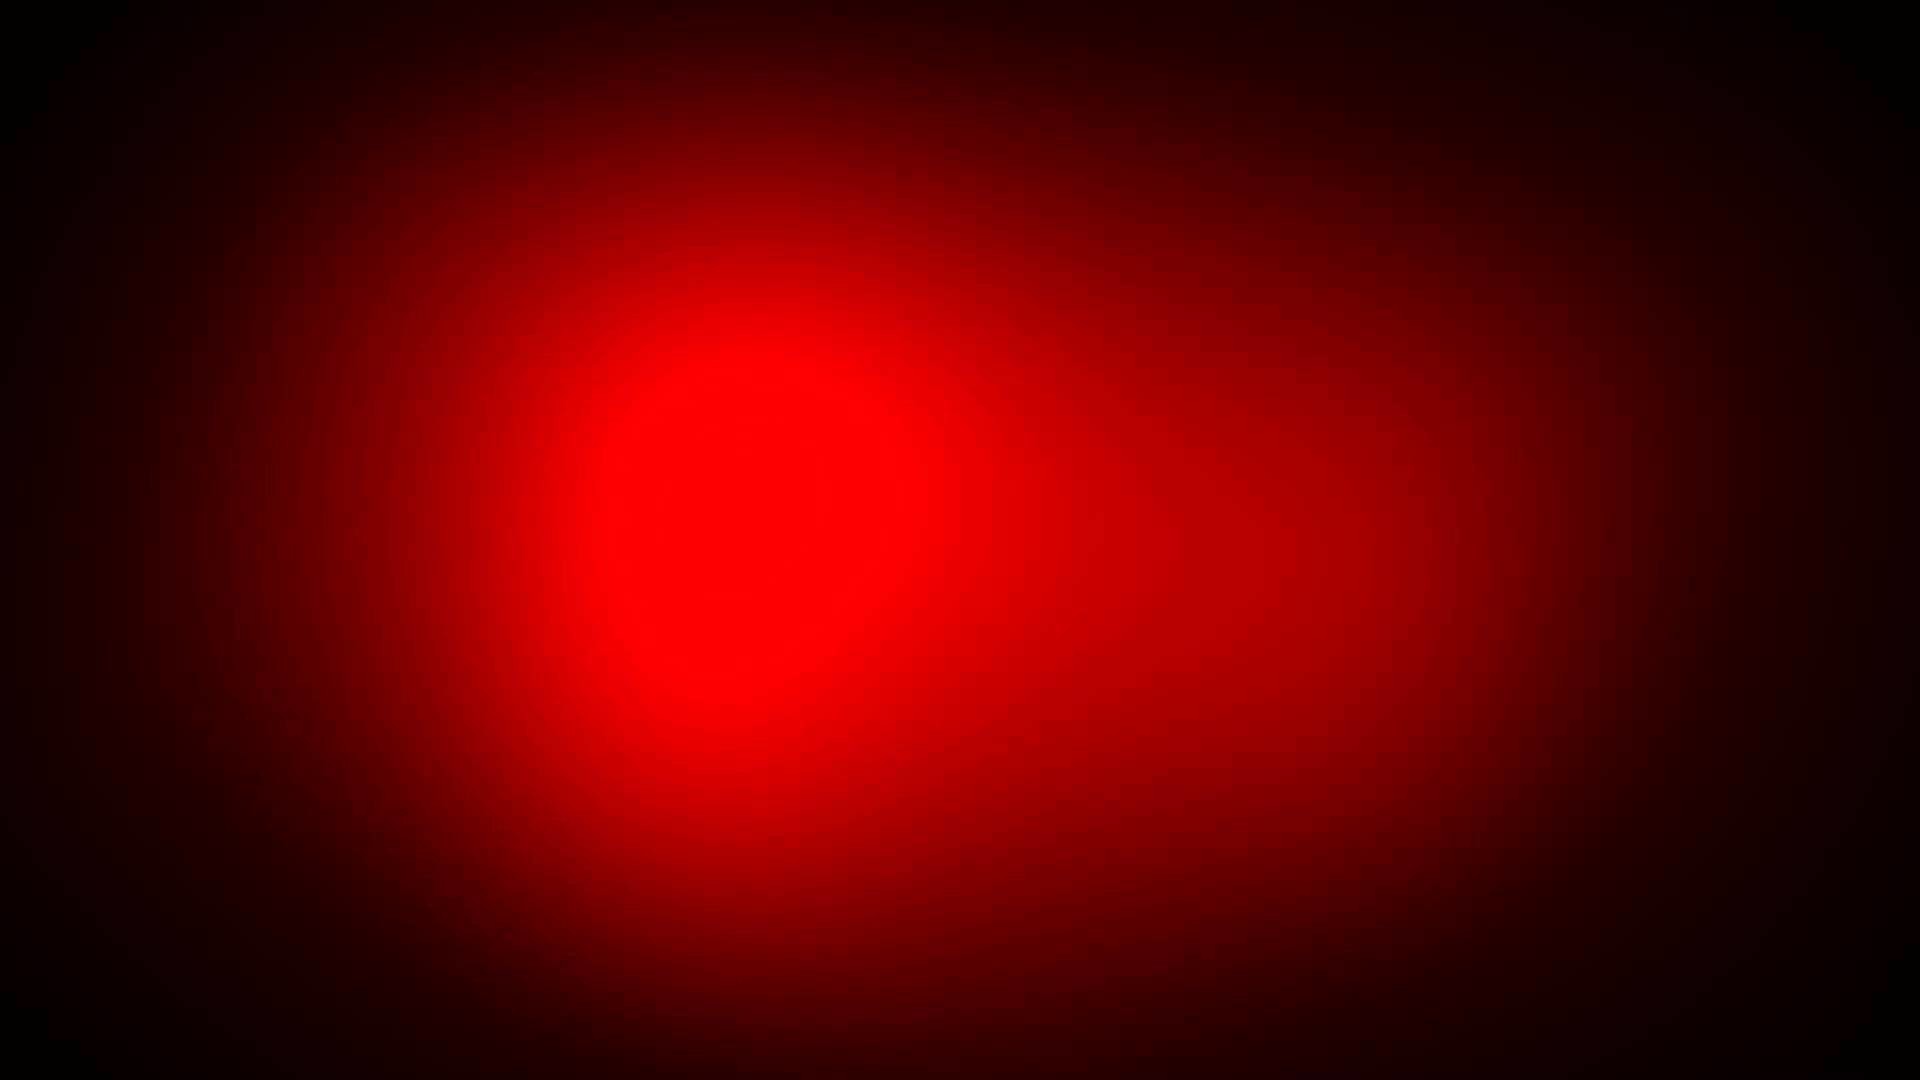 red wallpaper hd 1080p,red,black,maroon,light,sky